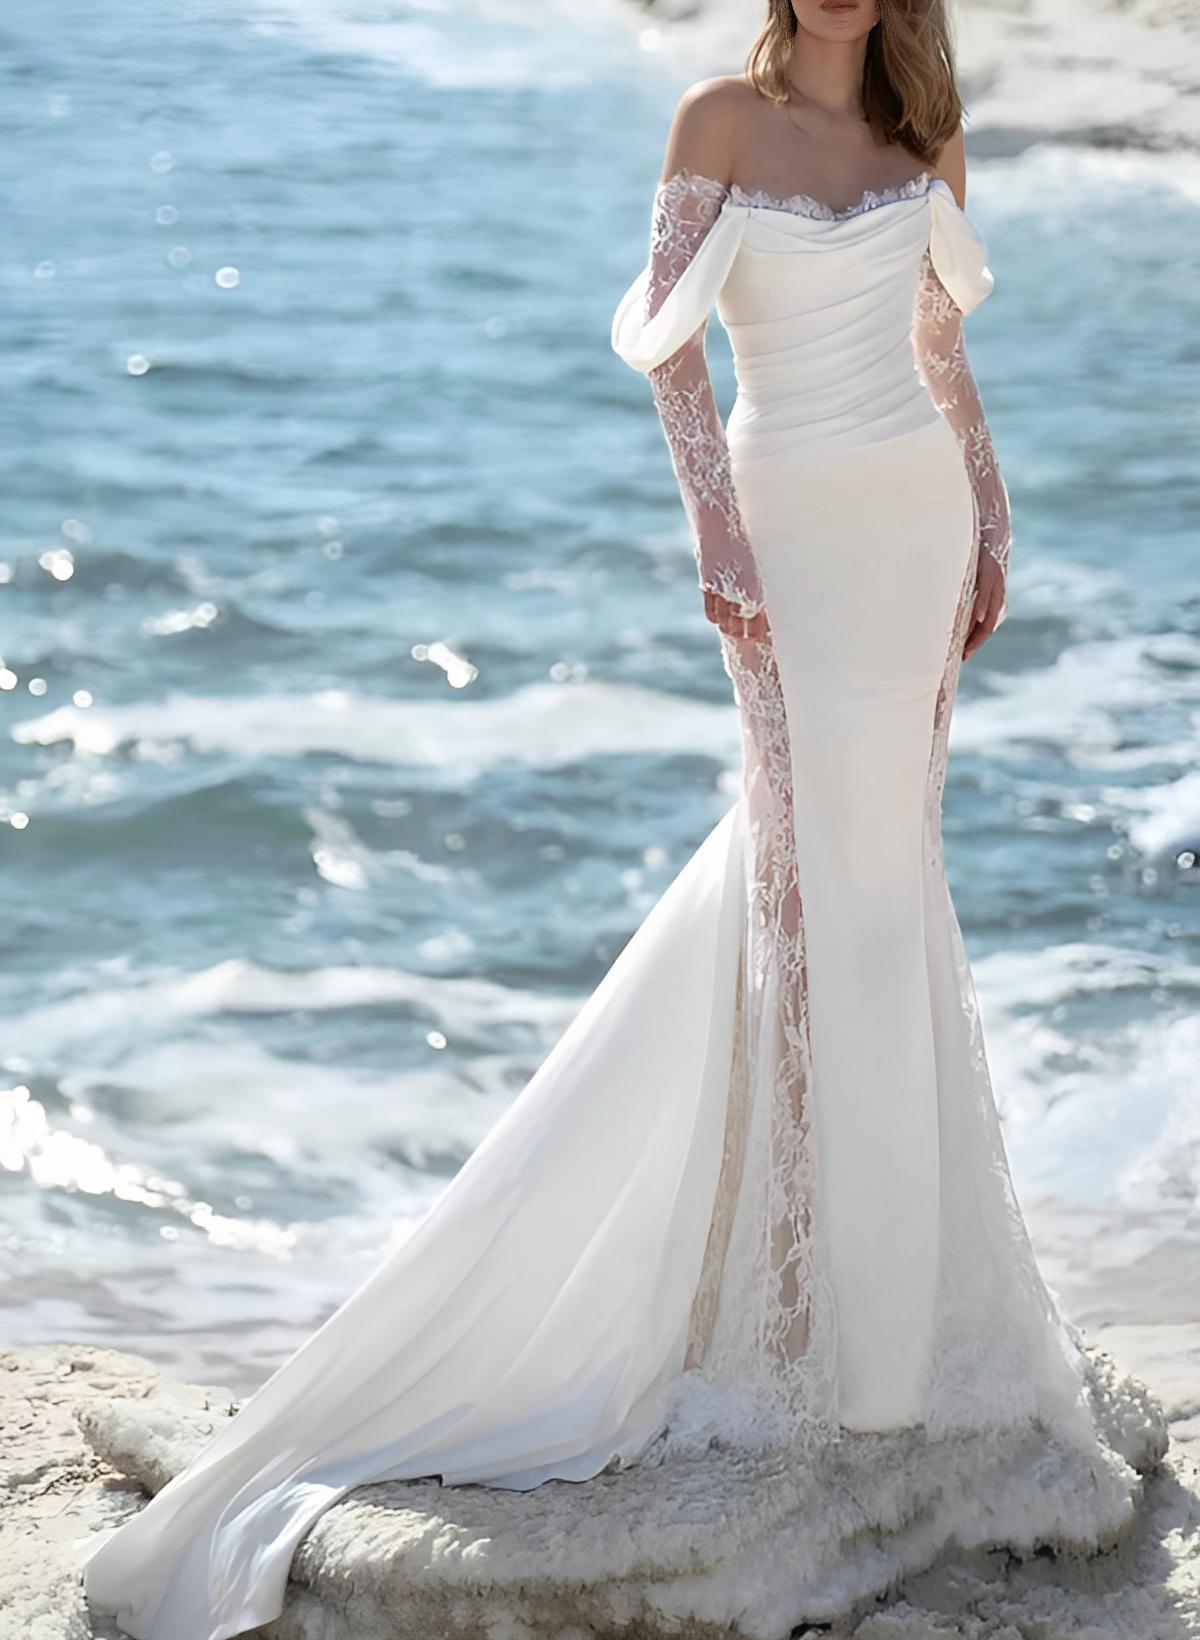 Beach/Boho Mermaid Off-The-Shoulder Sleeveless Wedding Dresses With Lace